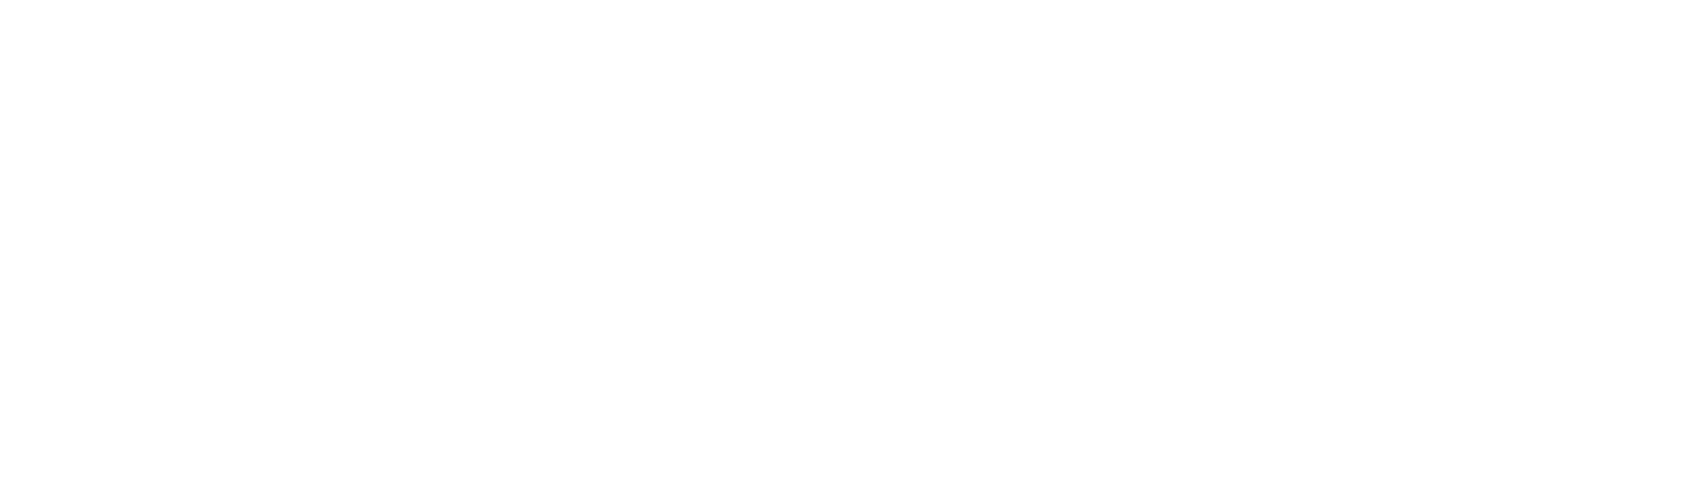 Charlie Foxtrot Papa